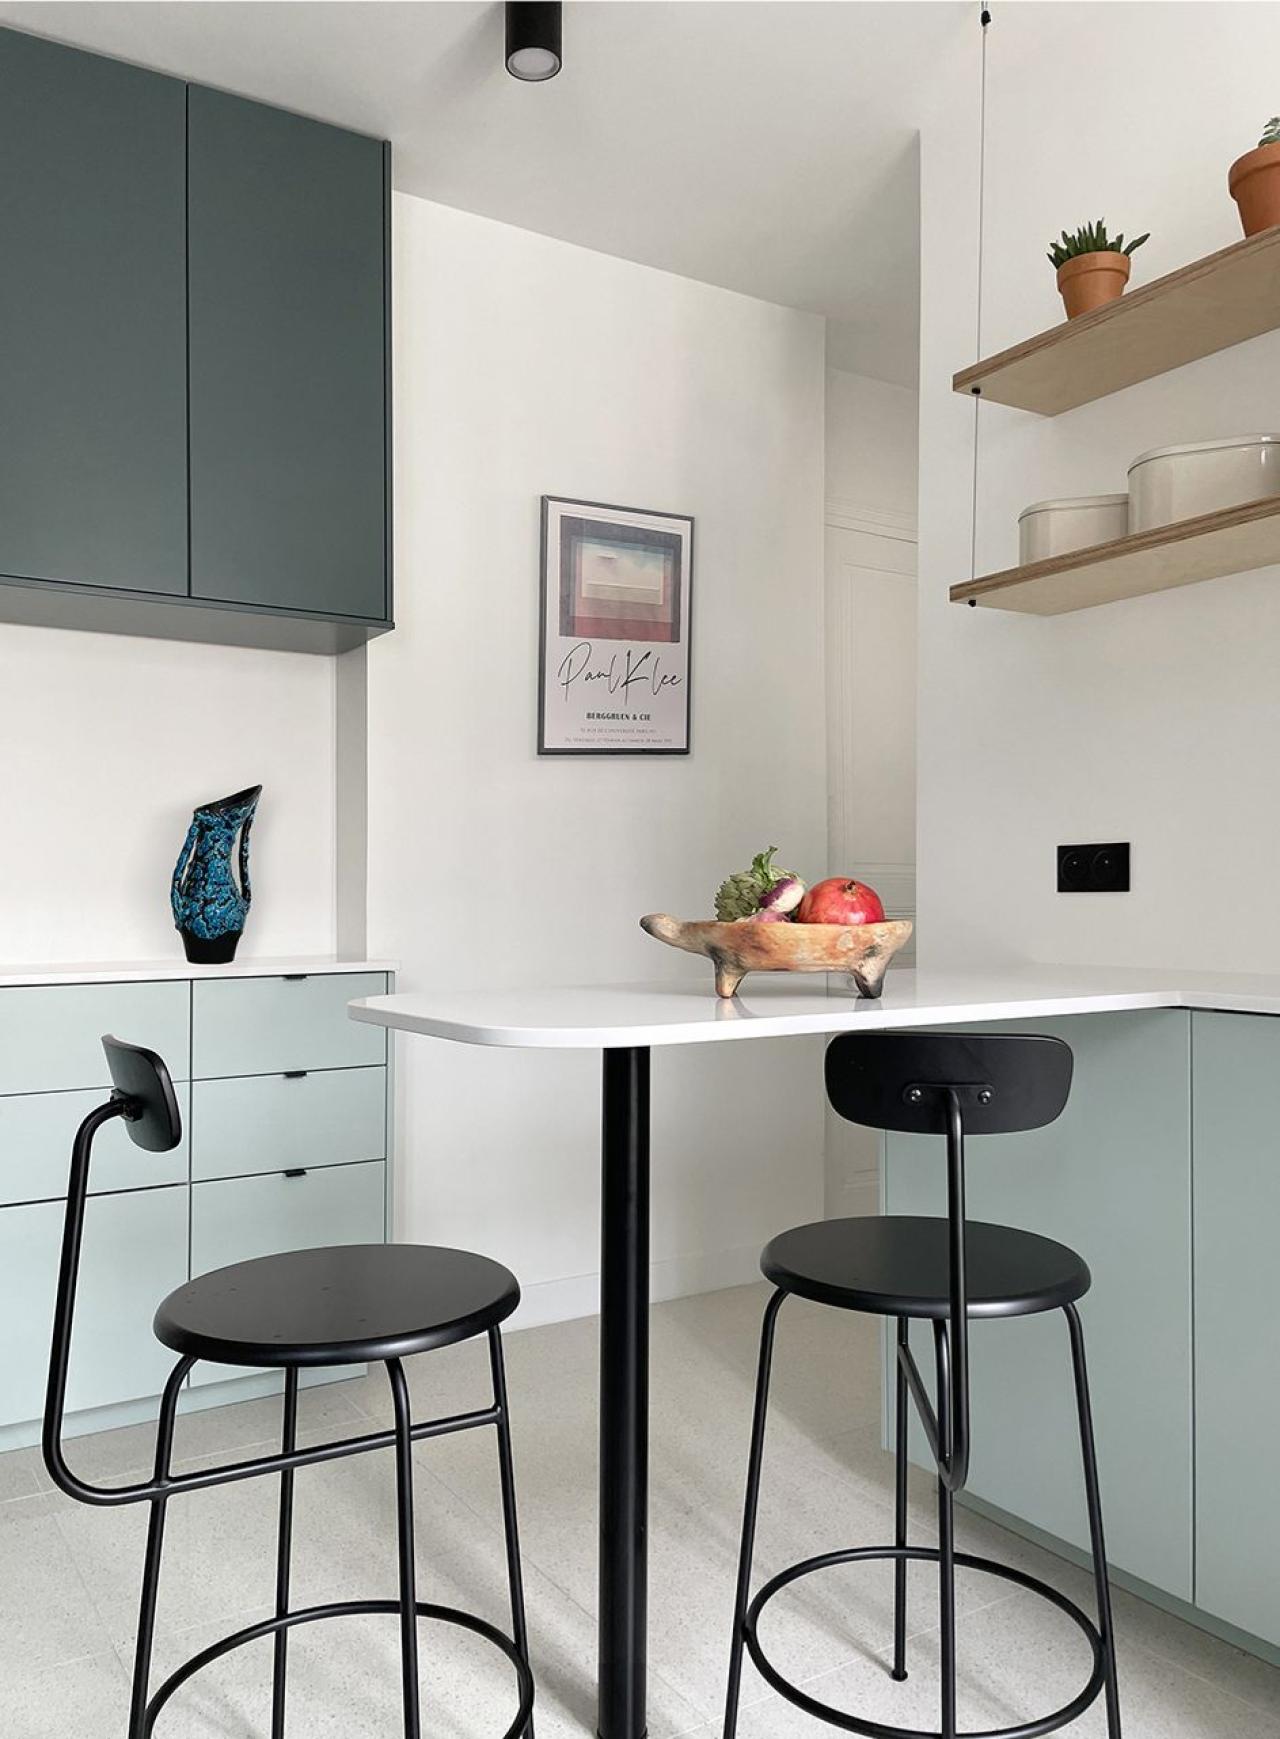 A Bleu paon & Amandier Kitchen created by Studio Bergam